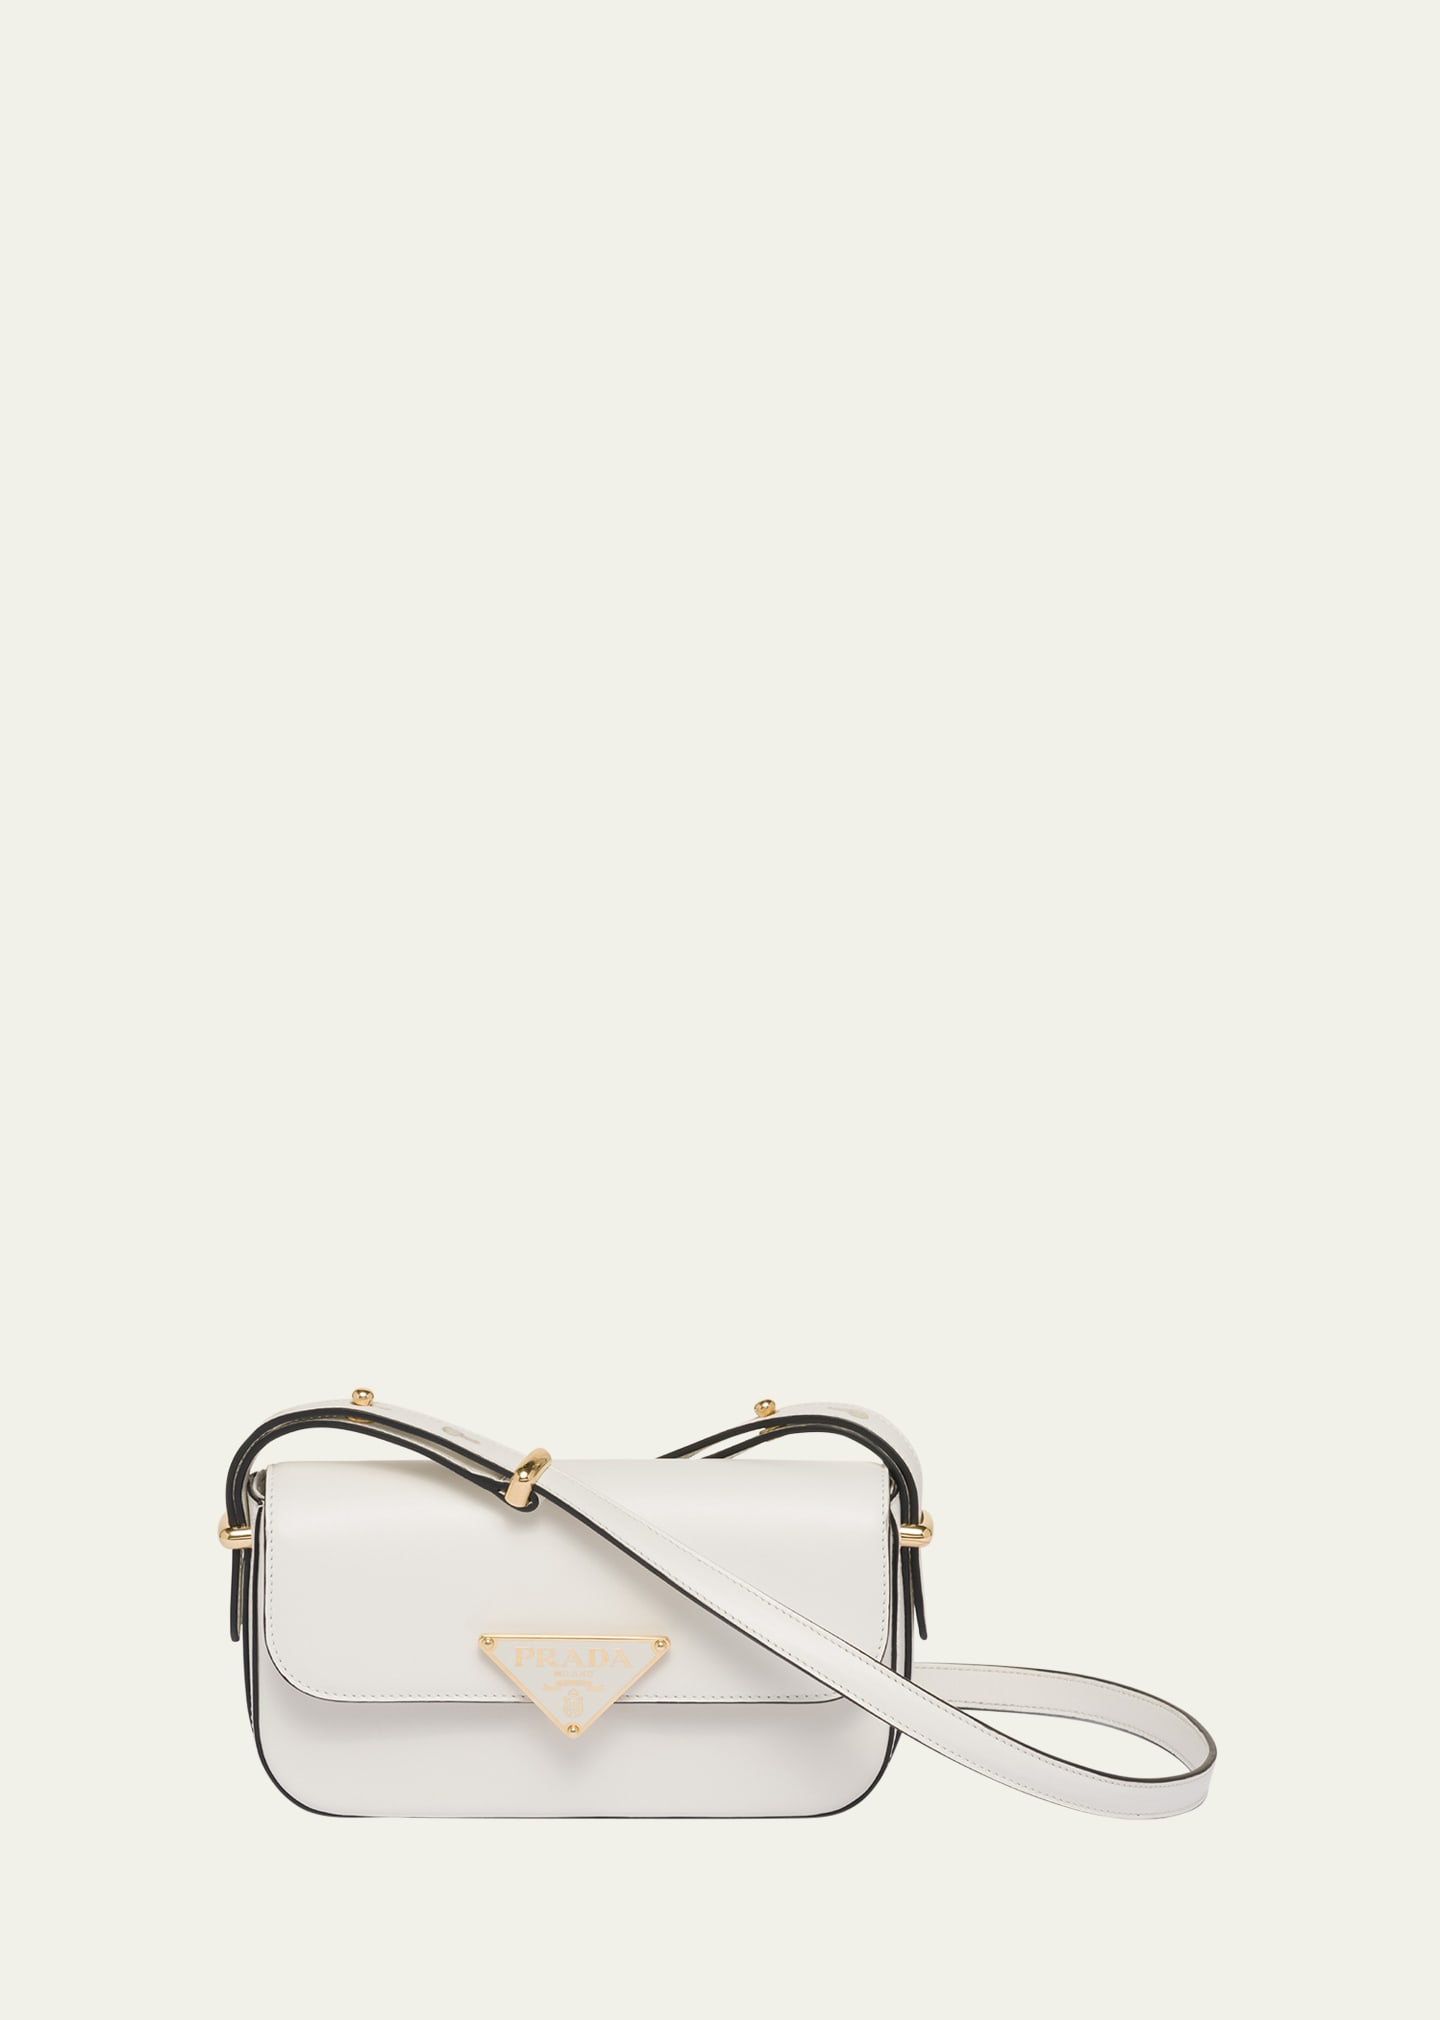 Prada Triangle Flap Leather Shoulder Bag In F0pg7 Bianco N